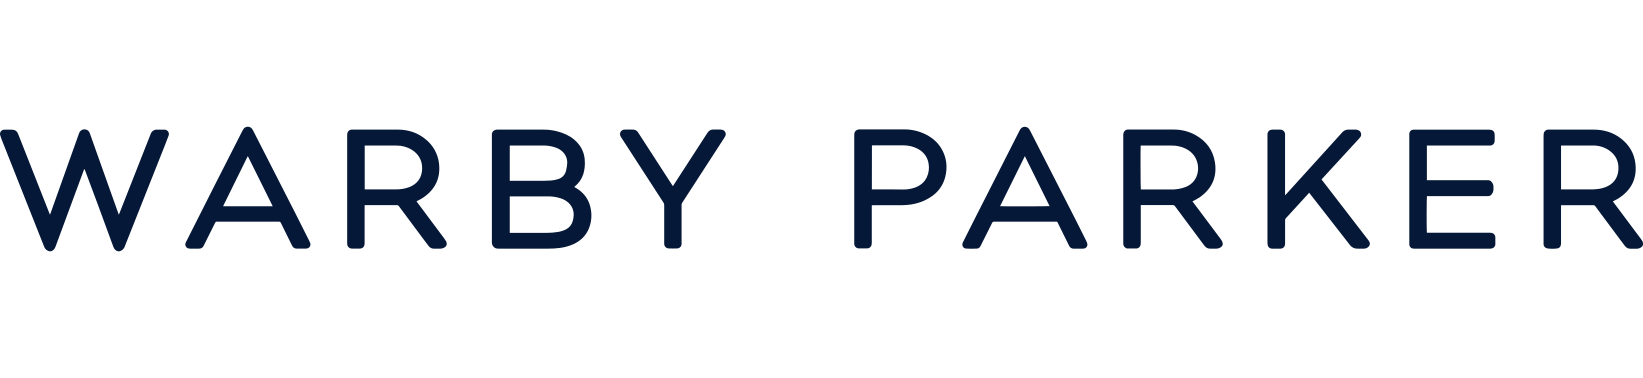 warby-parker-logo-navy